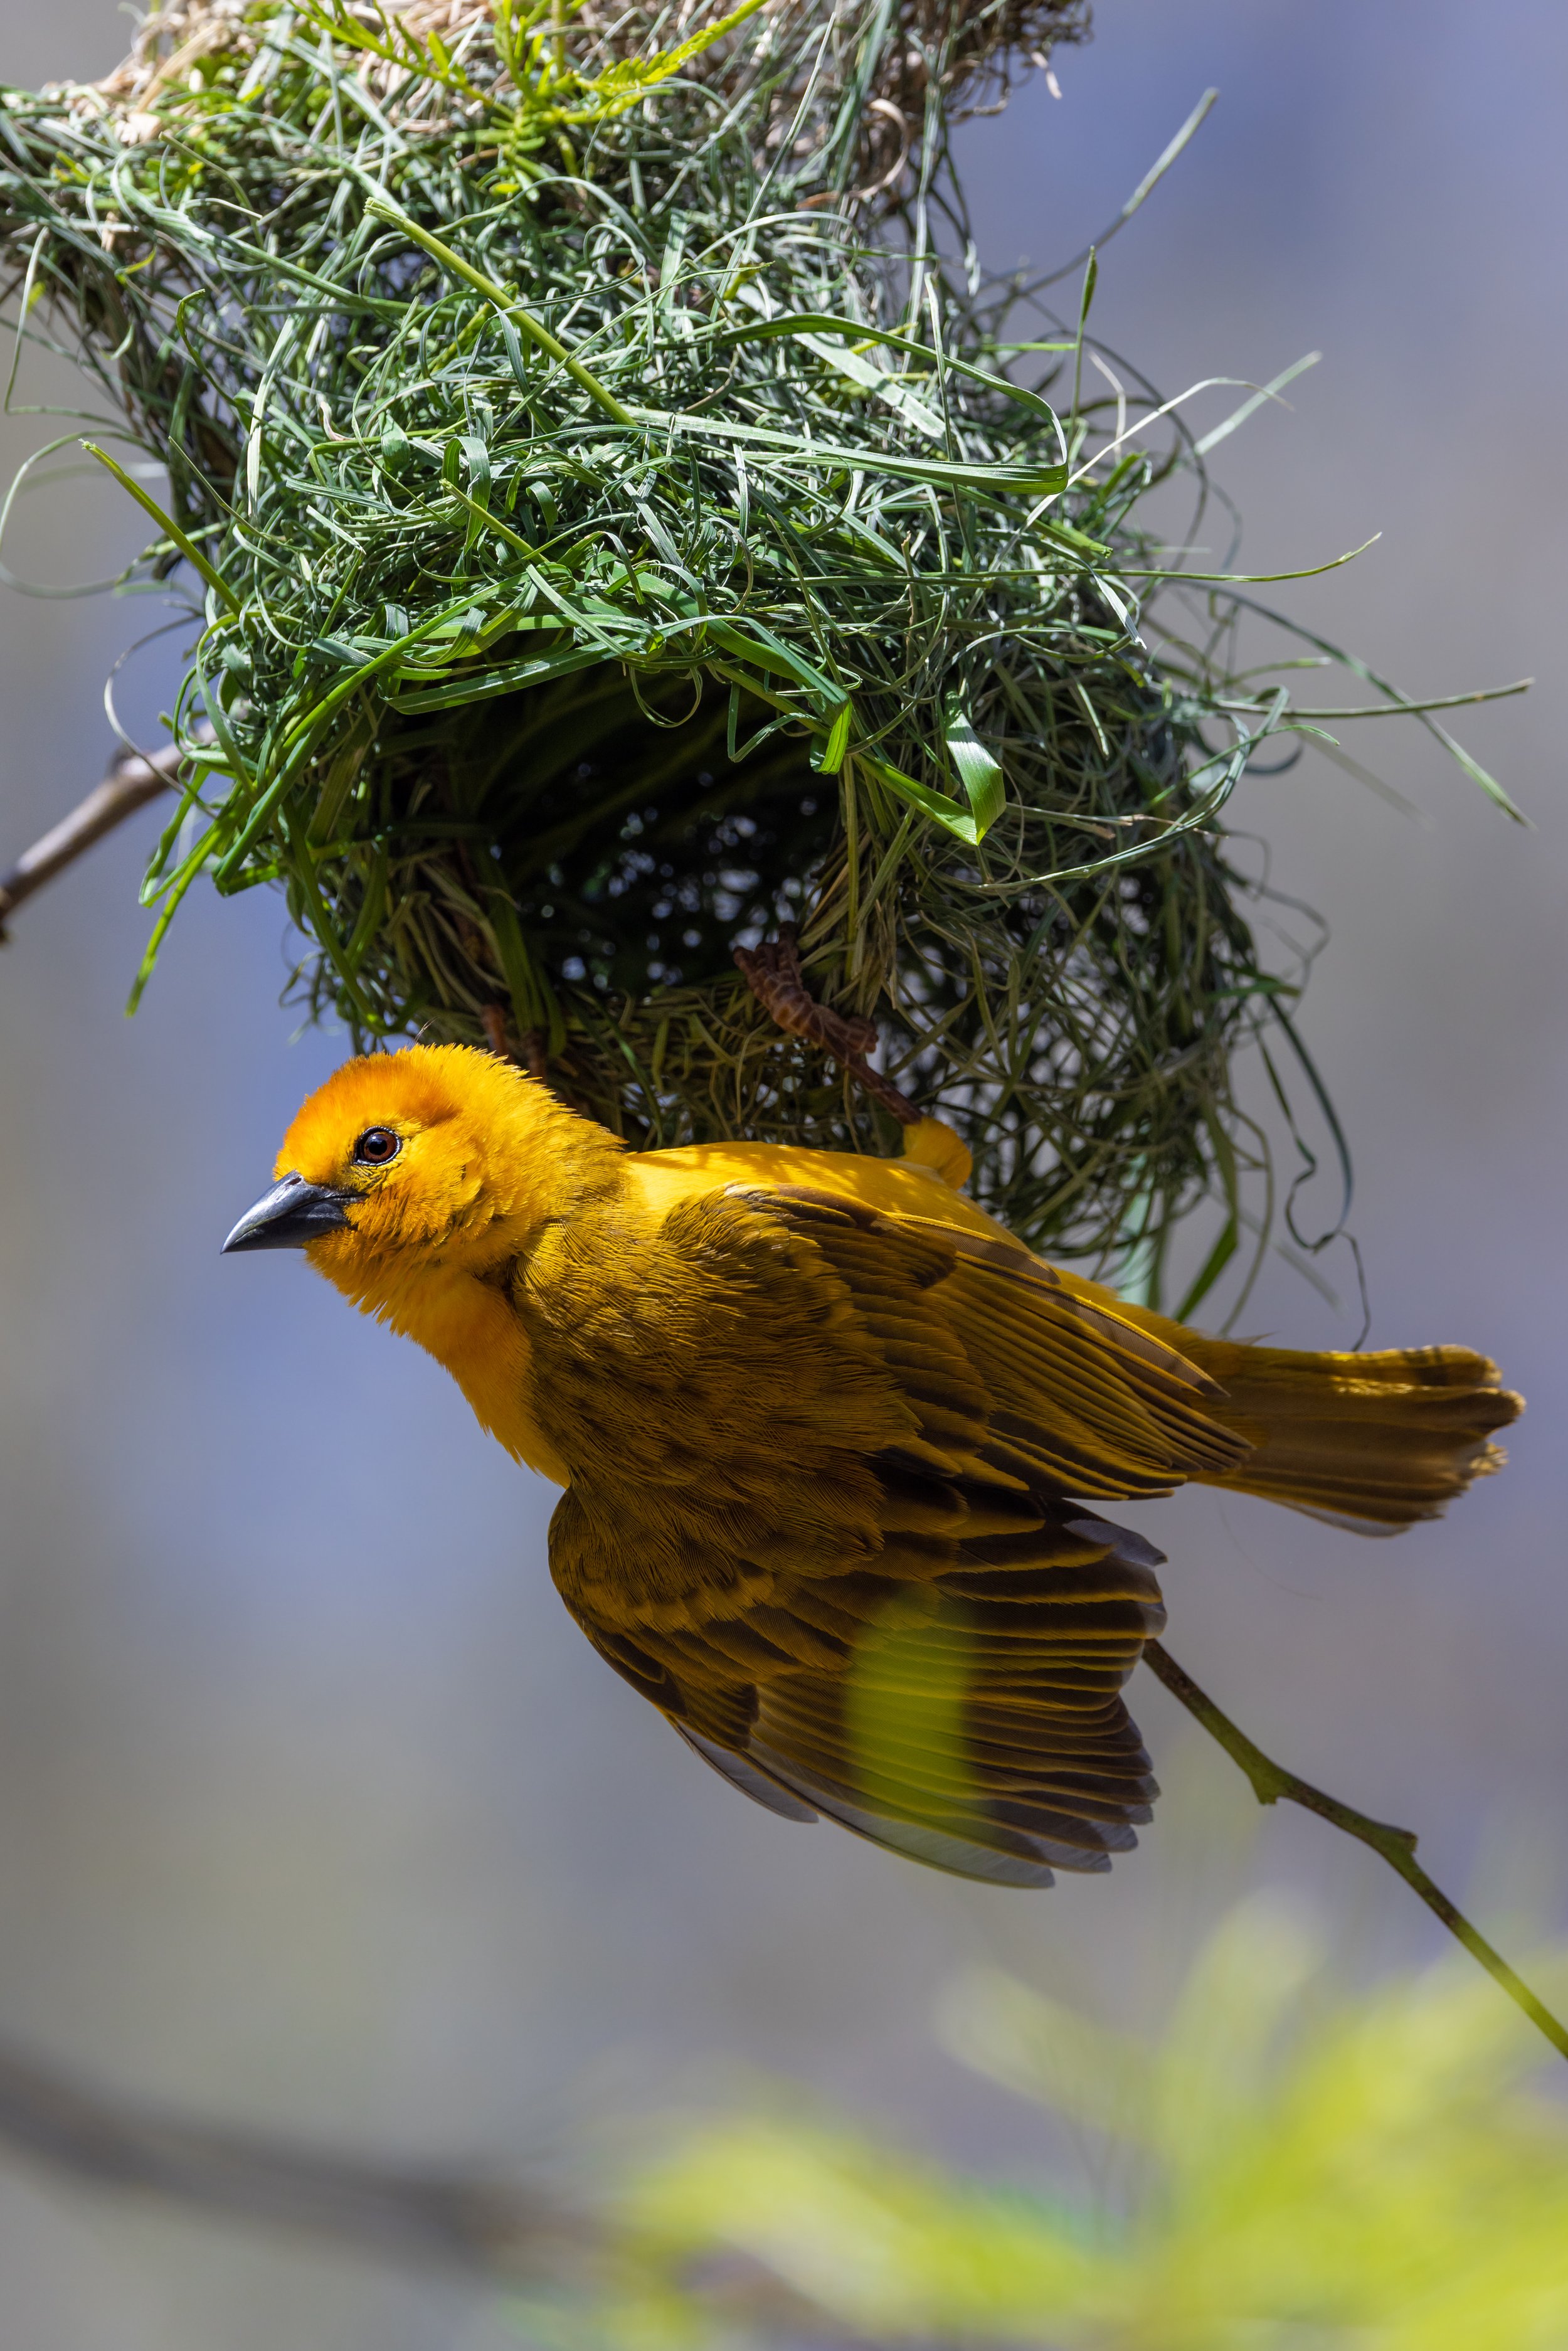 taveta-golden-weaver-san-diego-zoo-africa-aviary-birds-wildlife-photography.jpg